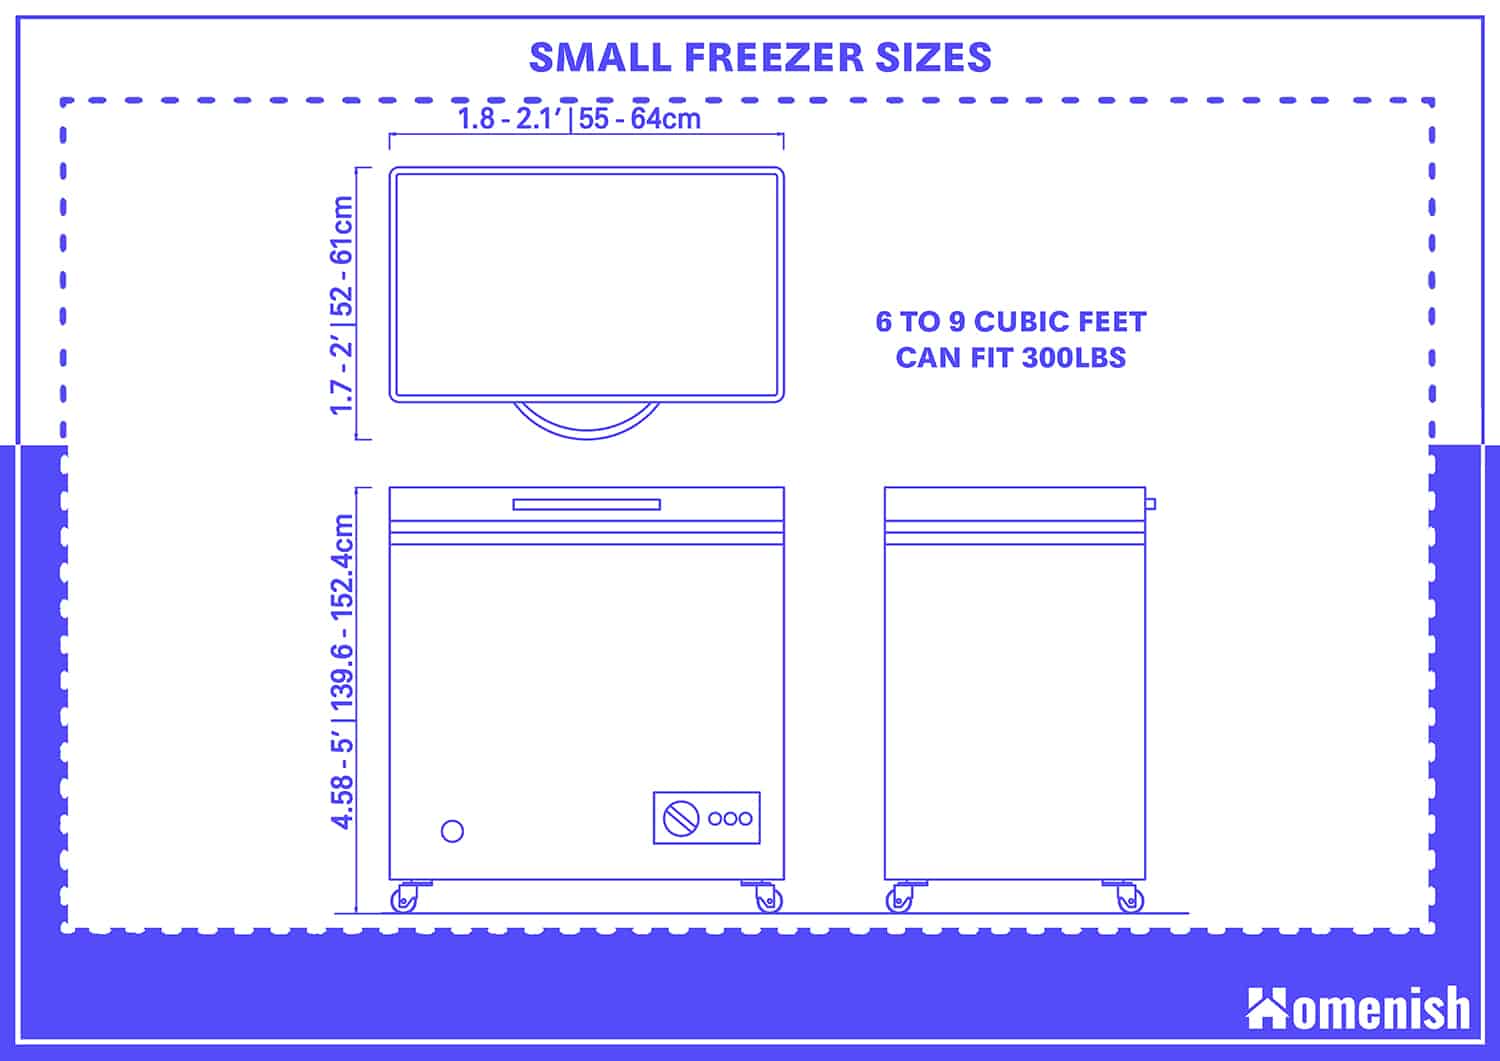 Small Freezer Sizes